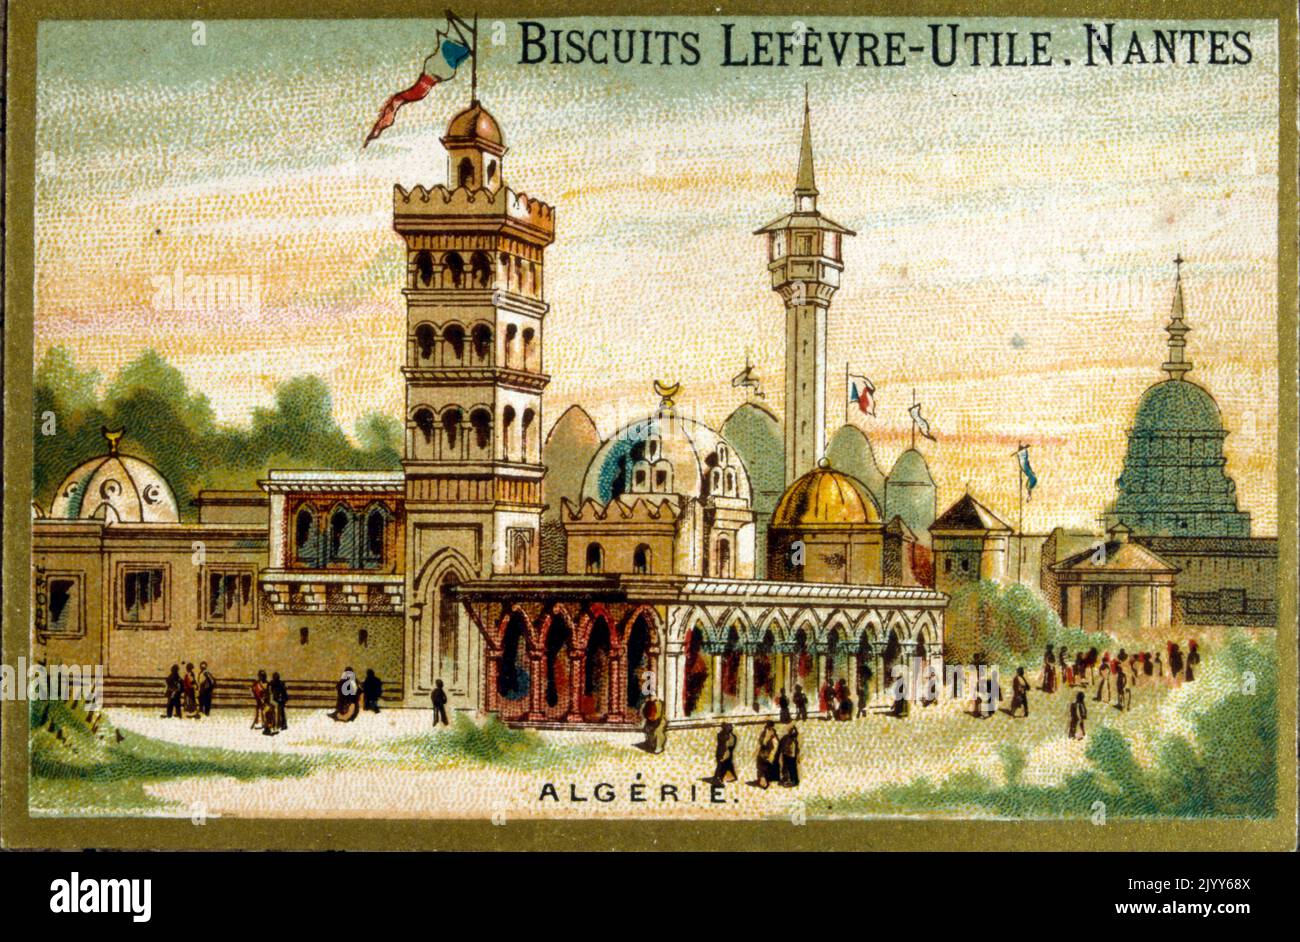 Image of the Lefevre-Utile Biscuit Factory in Nantes; commemorative image of Algeria. Stock Photo